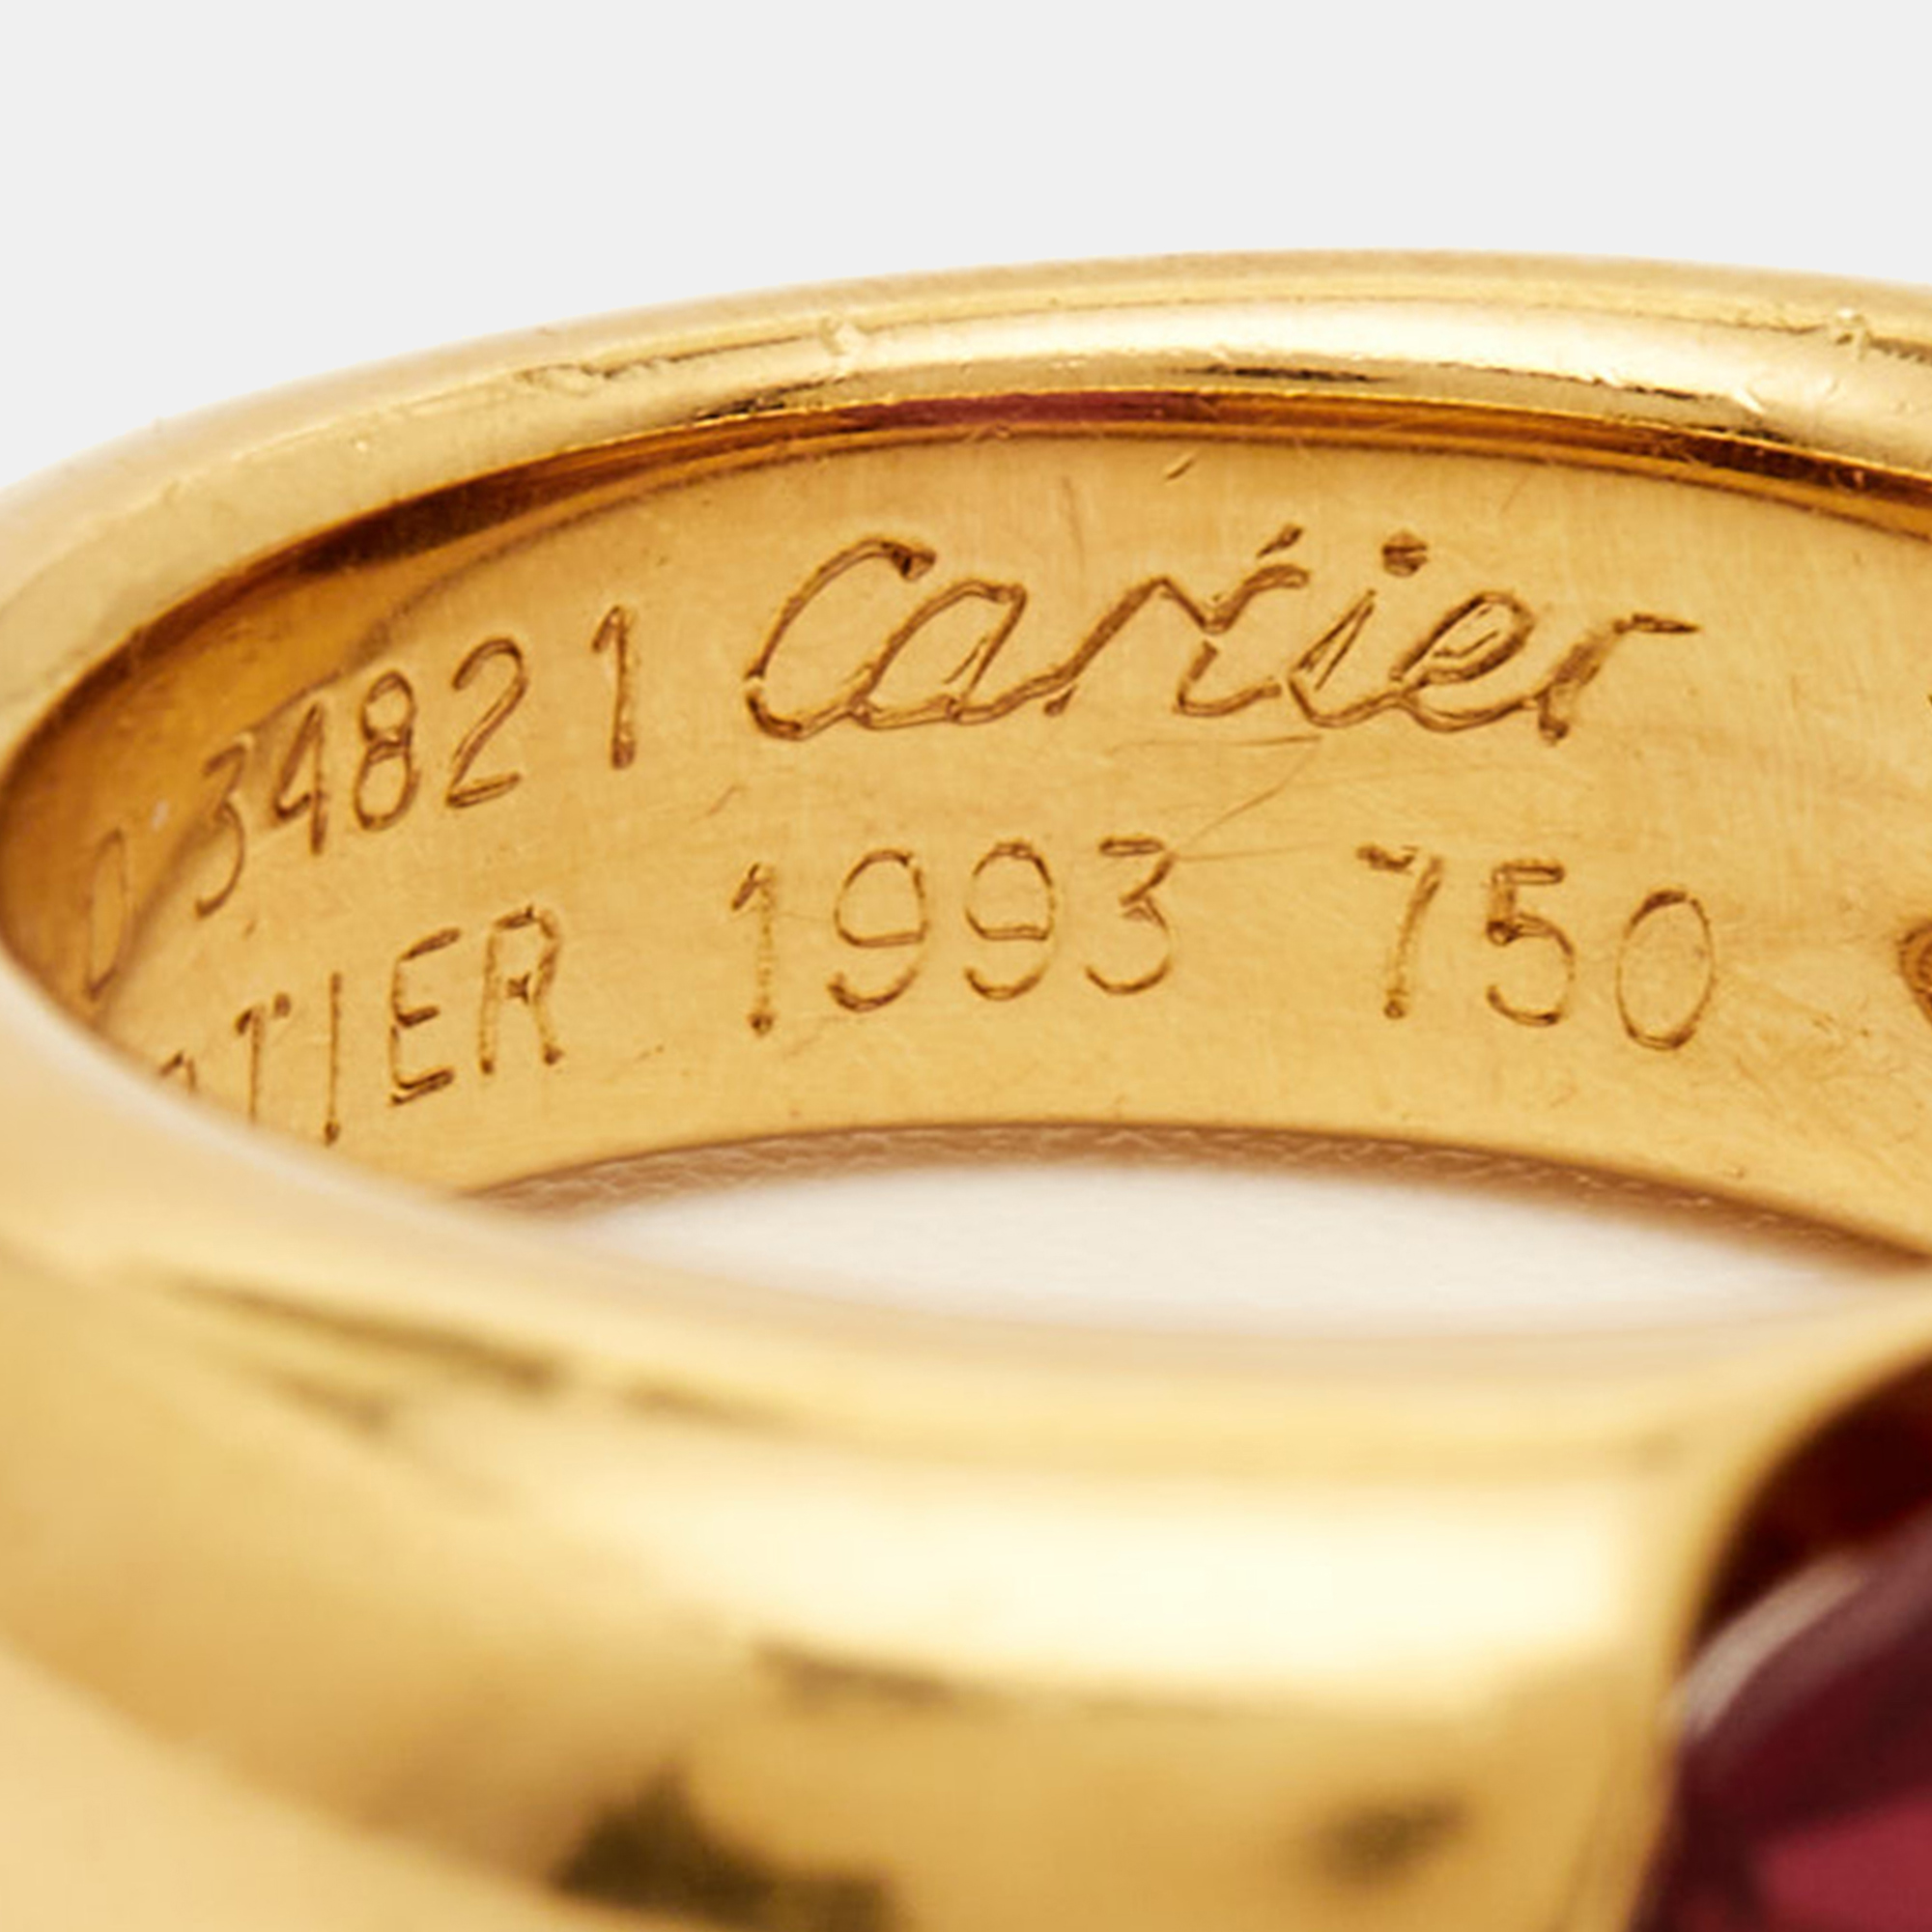 Cartier Eclipse Tourmaline 18k Yellow Gold Ring Size 52